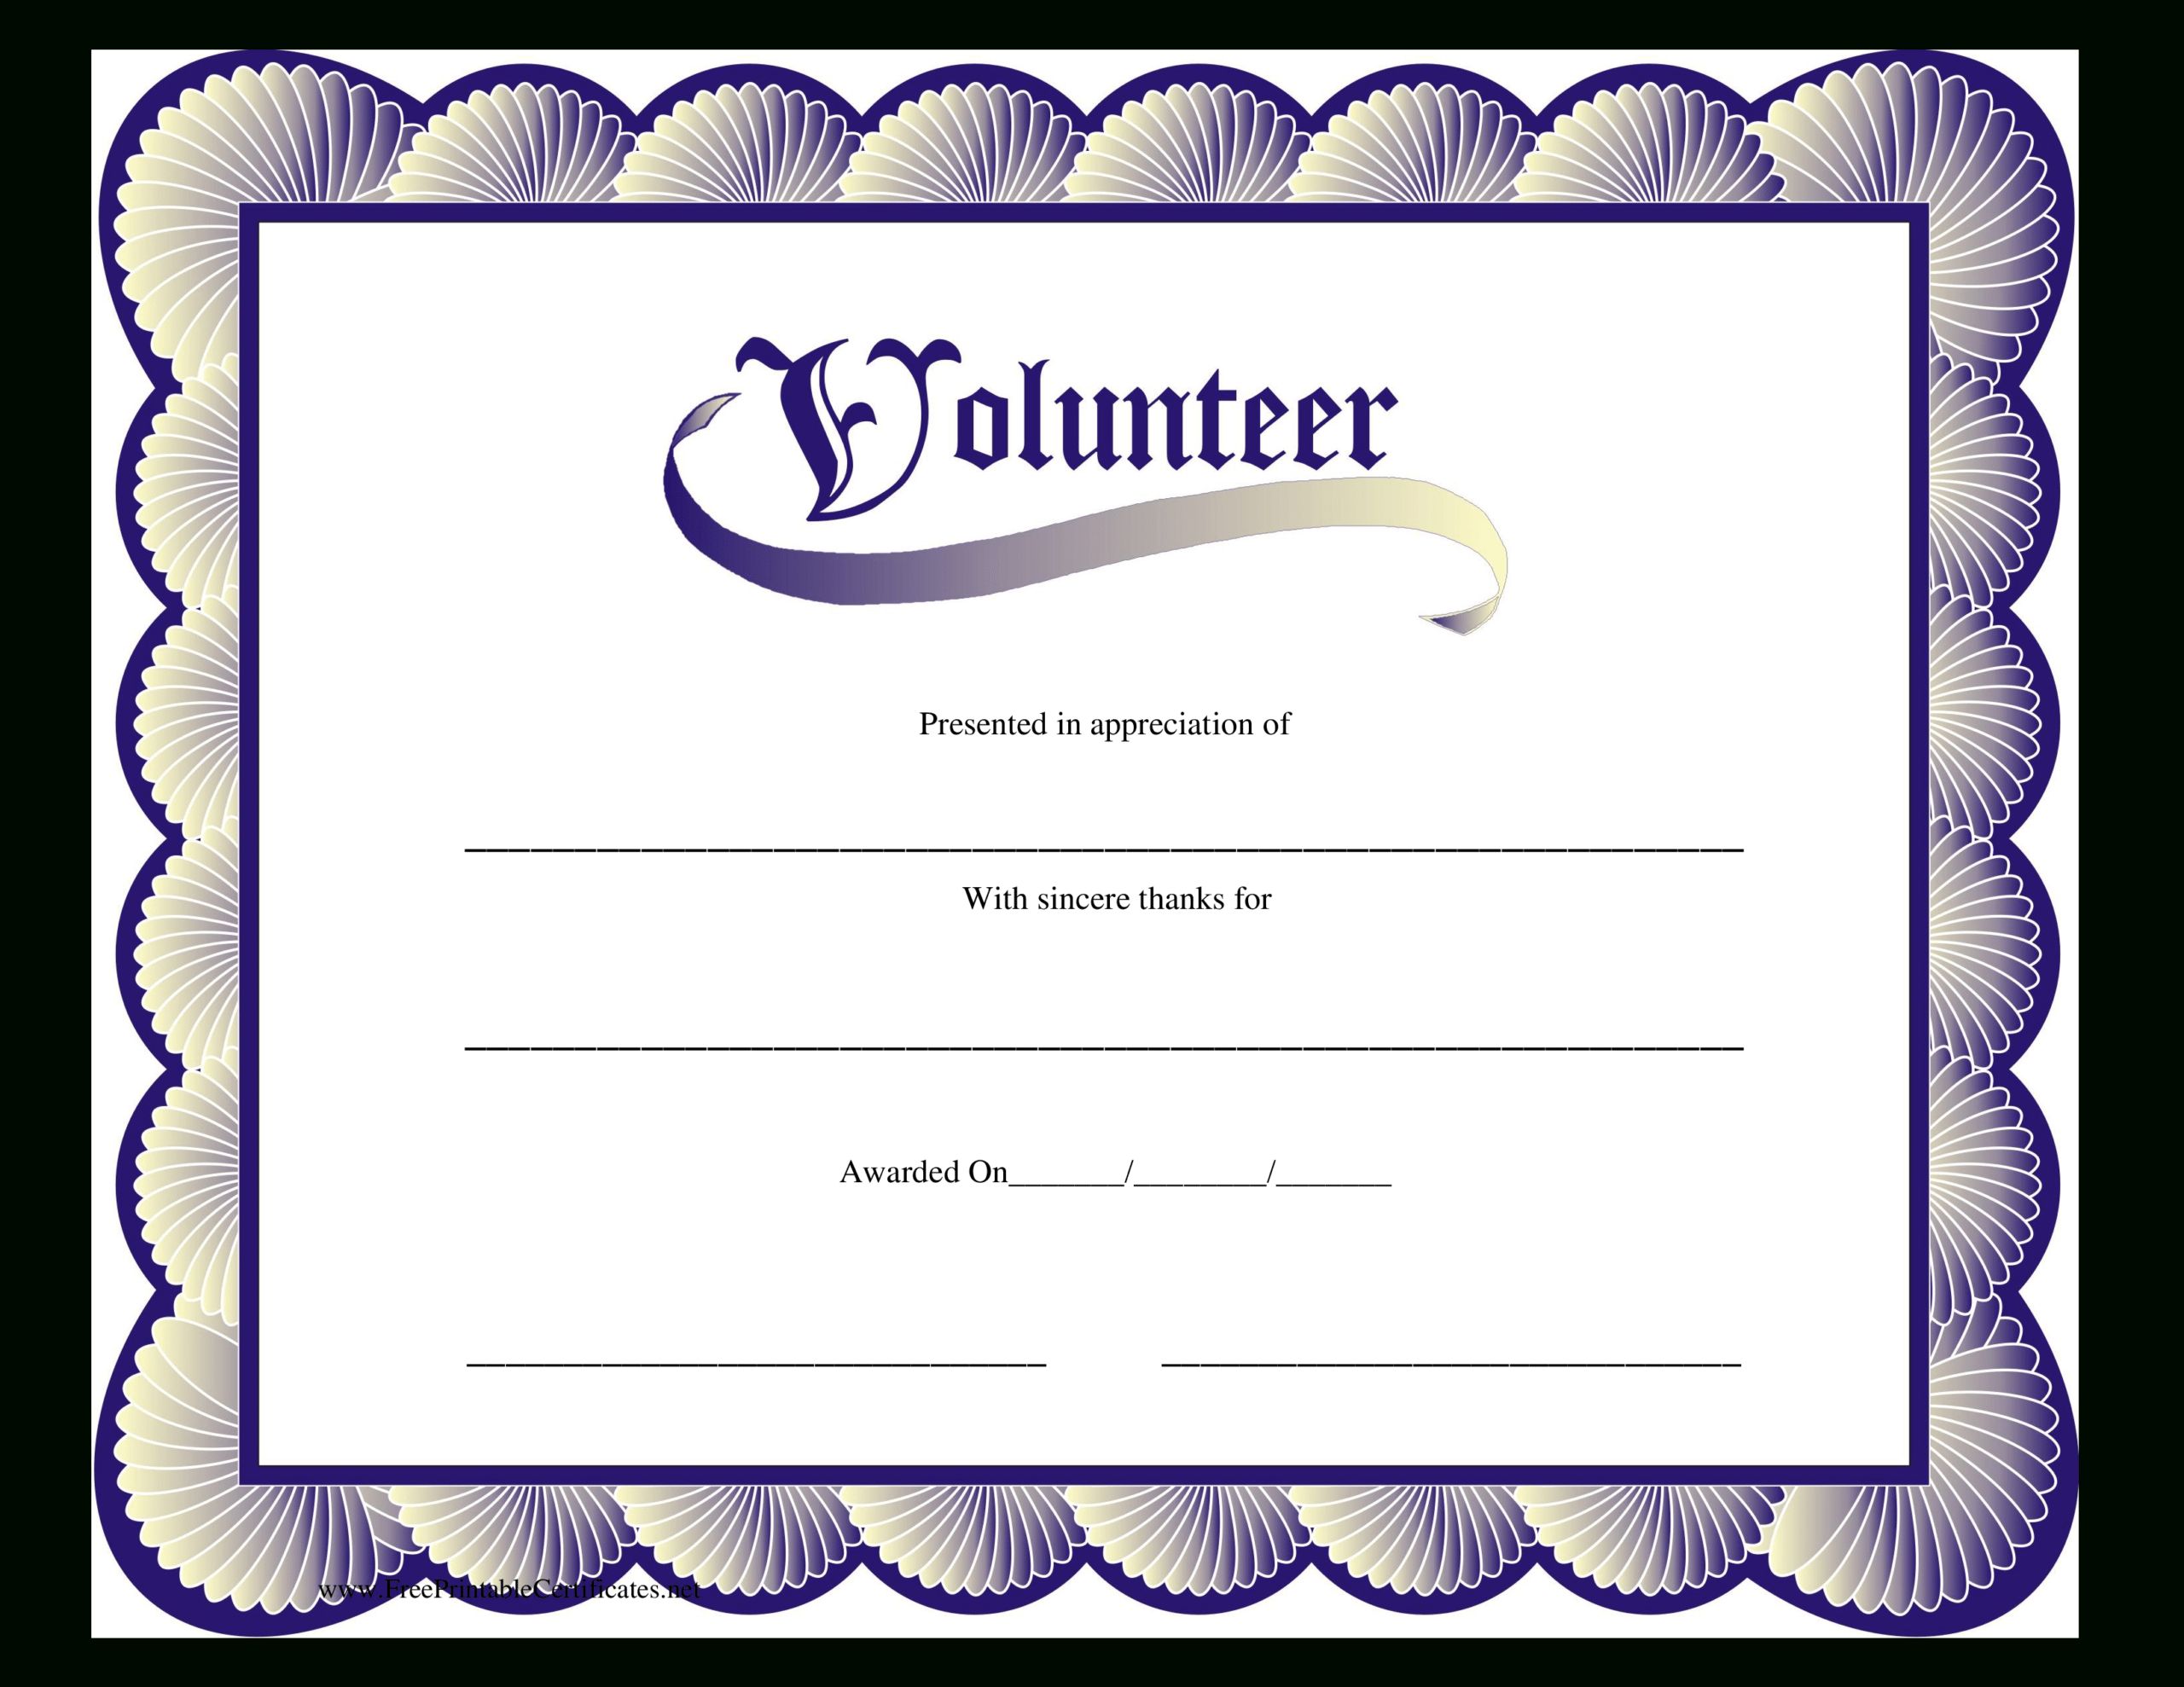 Volunteer Certificate | Templates At Allbusinesstemplates With Regard To Volunteer Certificate Templates